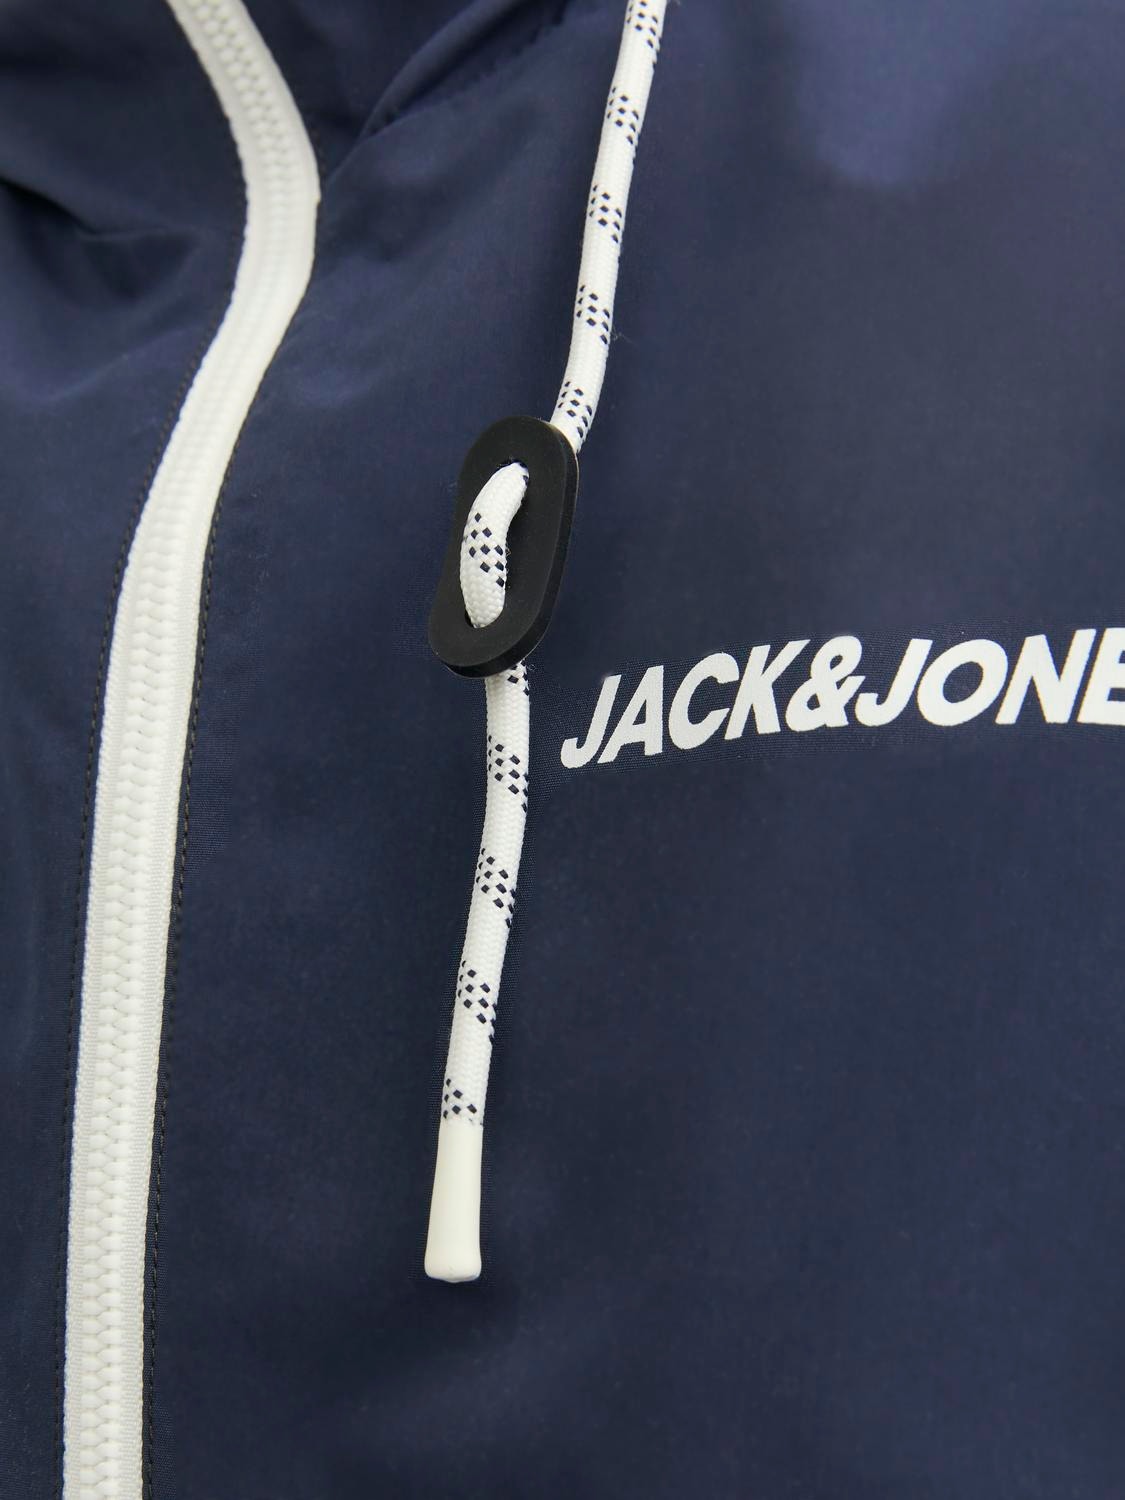 Jack & Jones Blousonjacke -Navy Blazer - 12200208